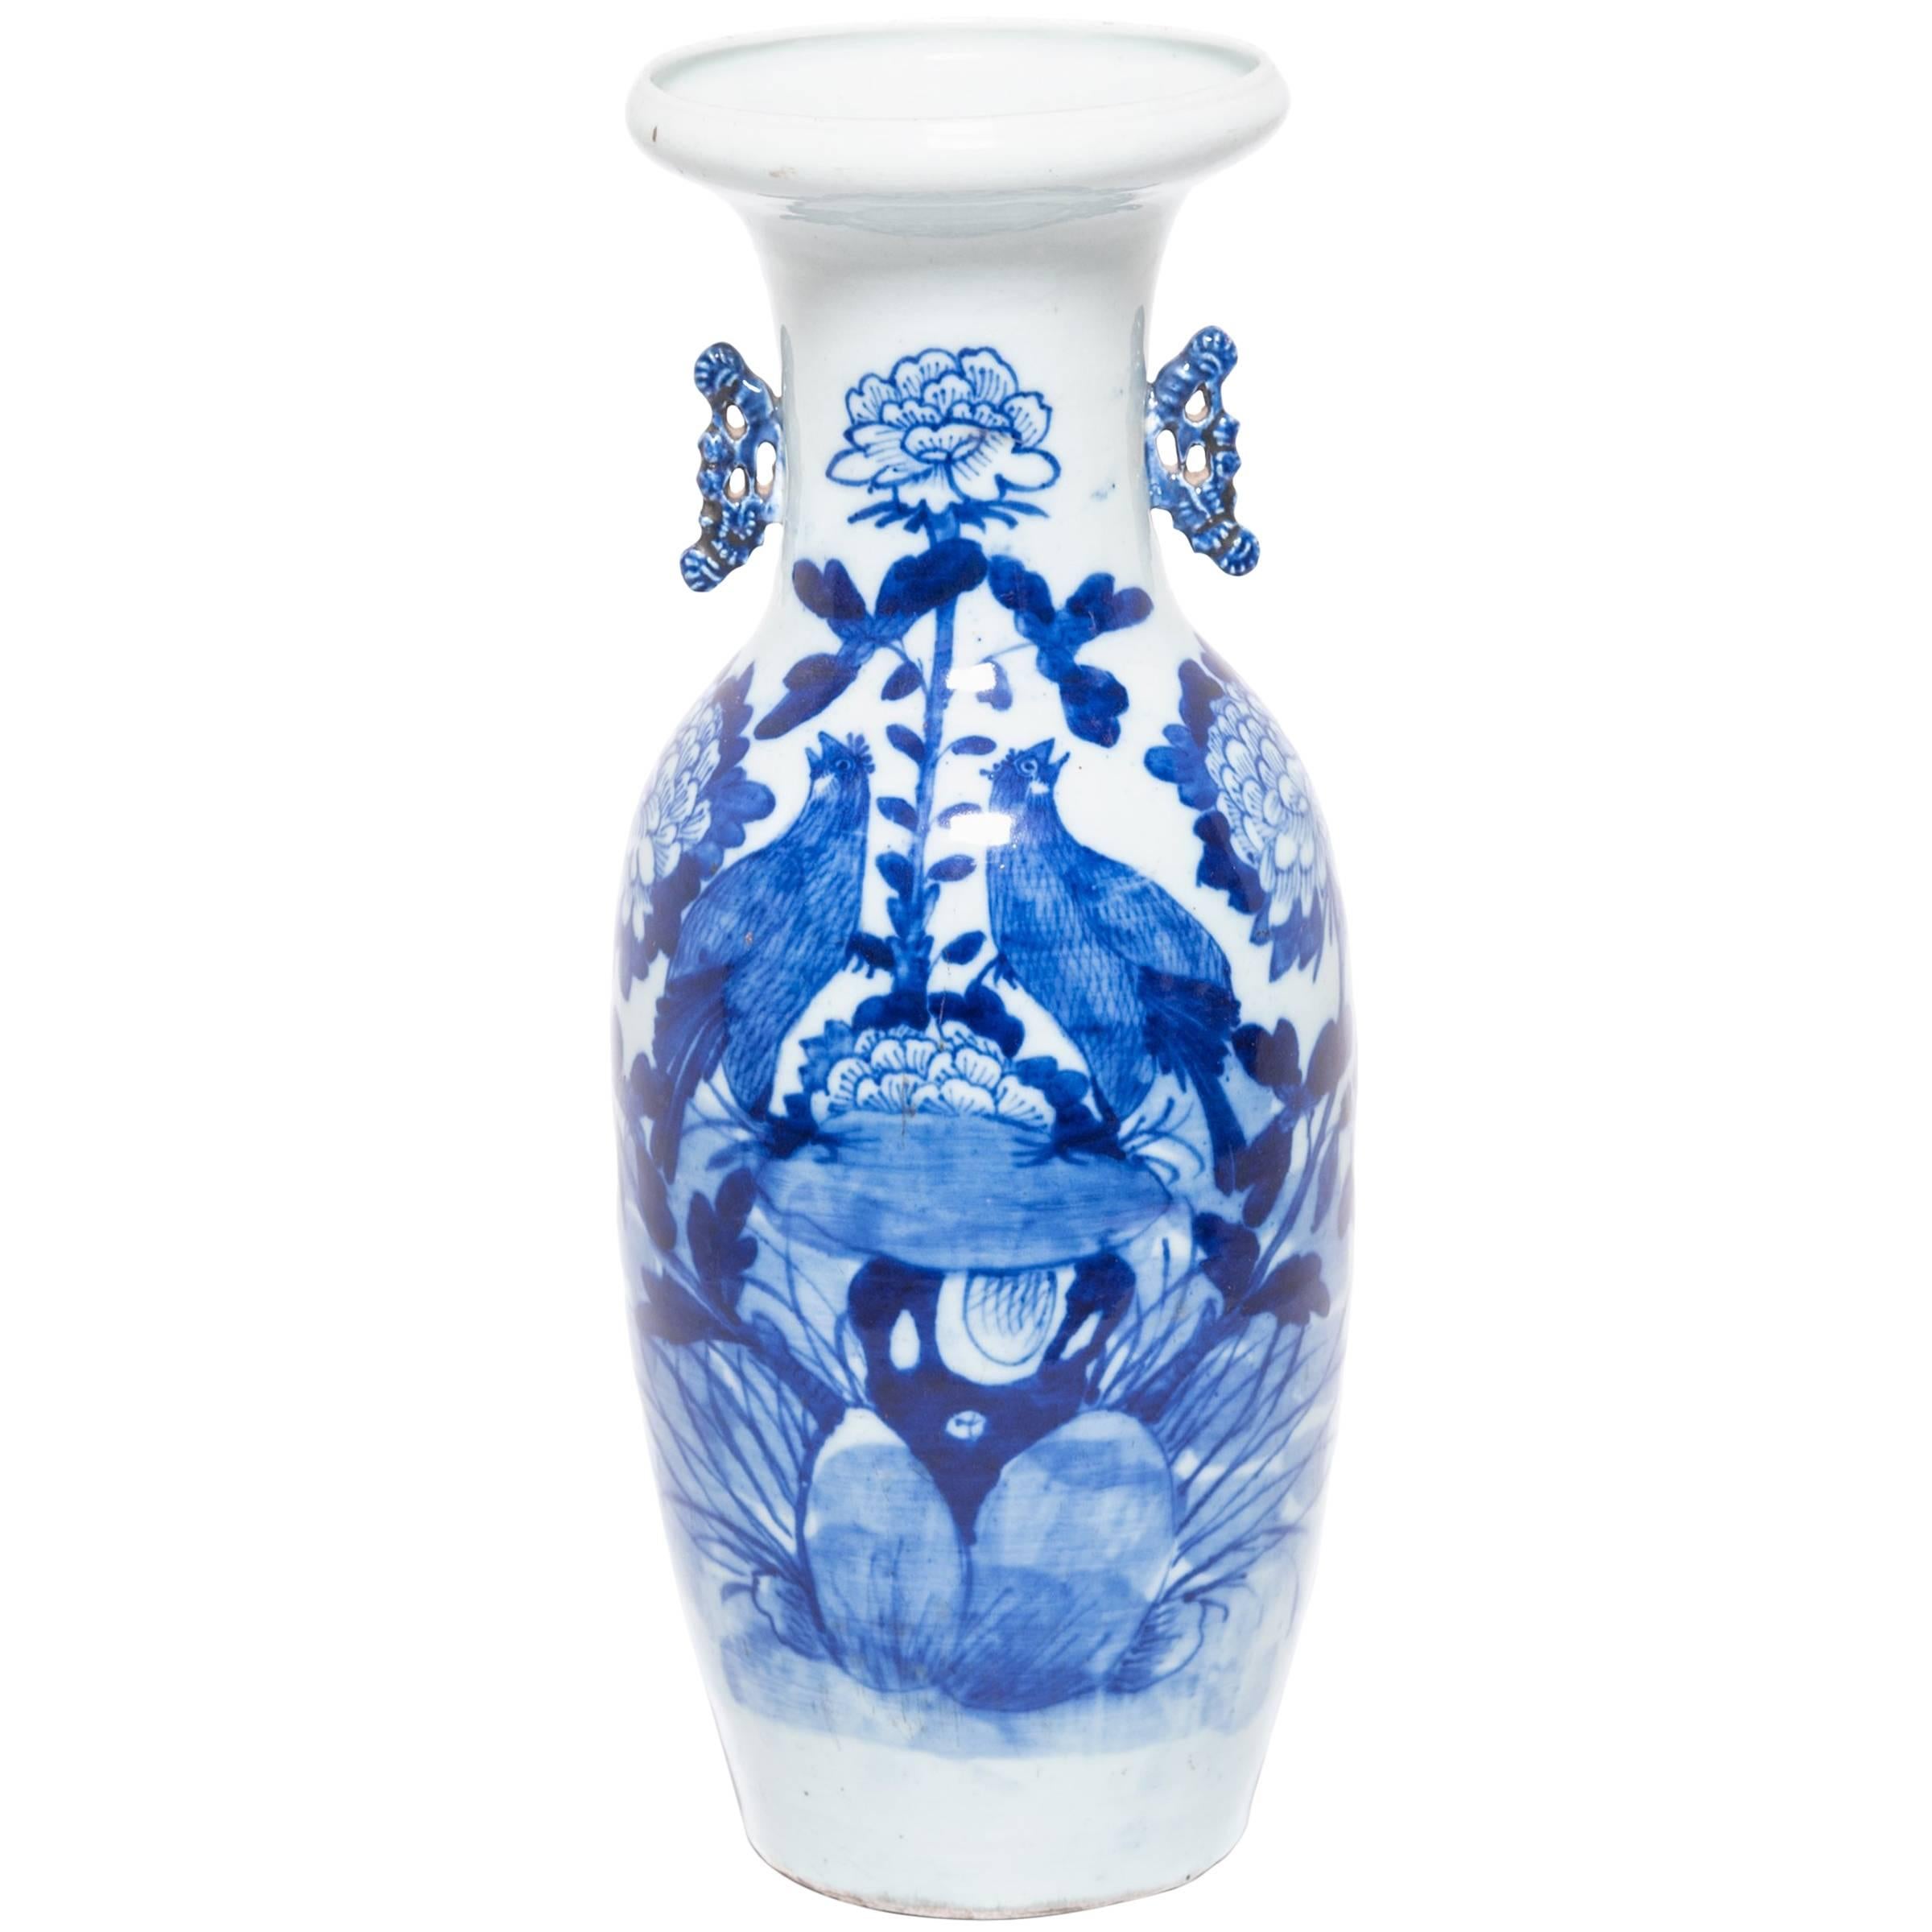 Chinese Blue and White "Lovebirds" Vase, c. 1850